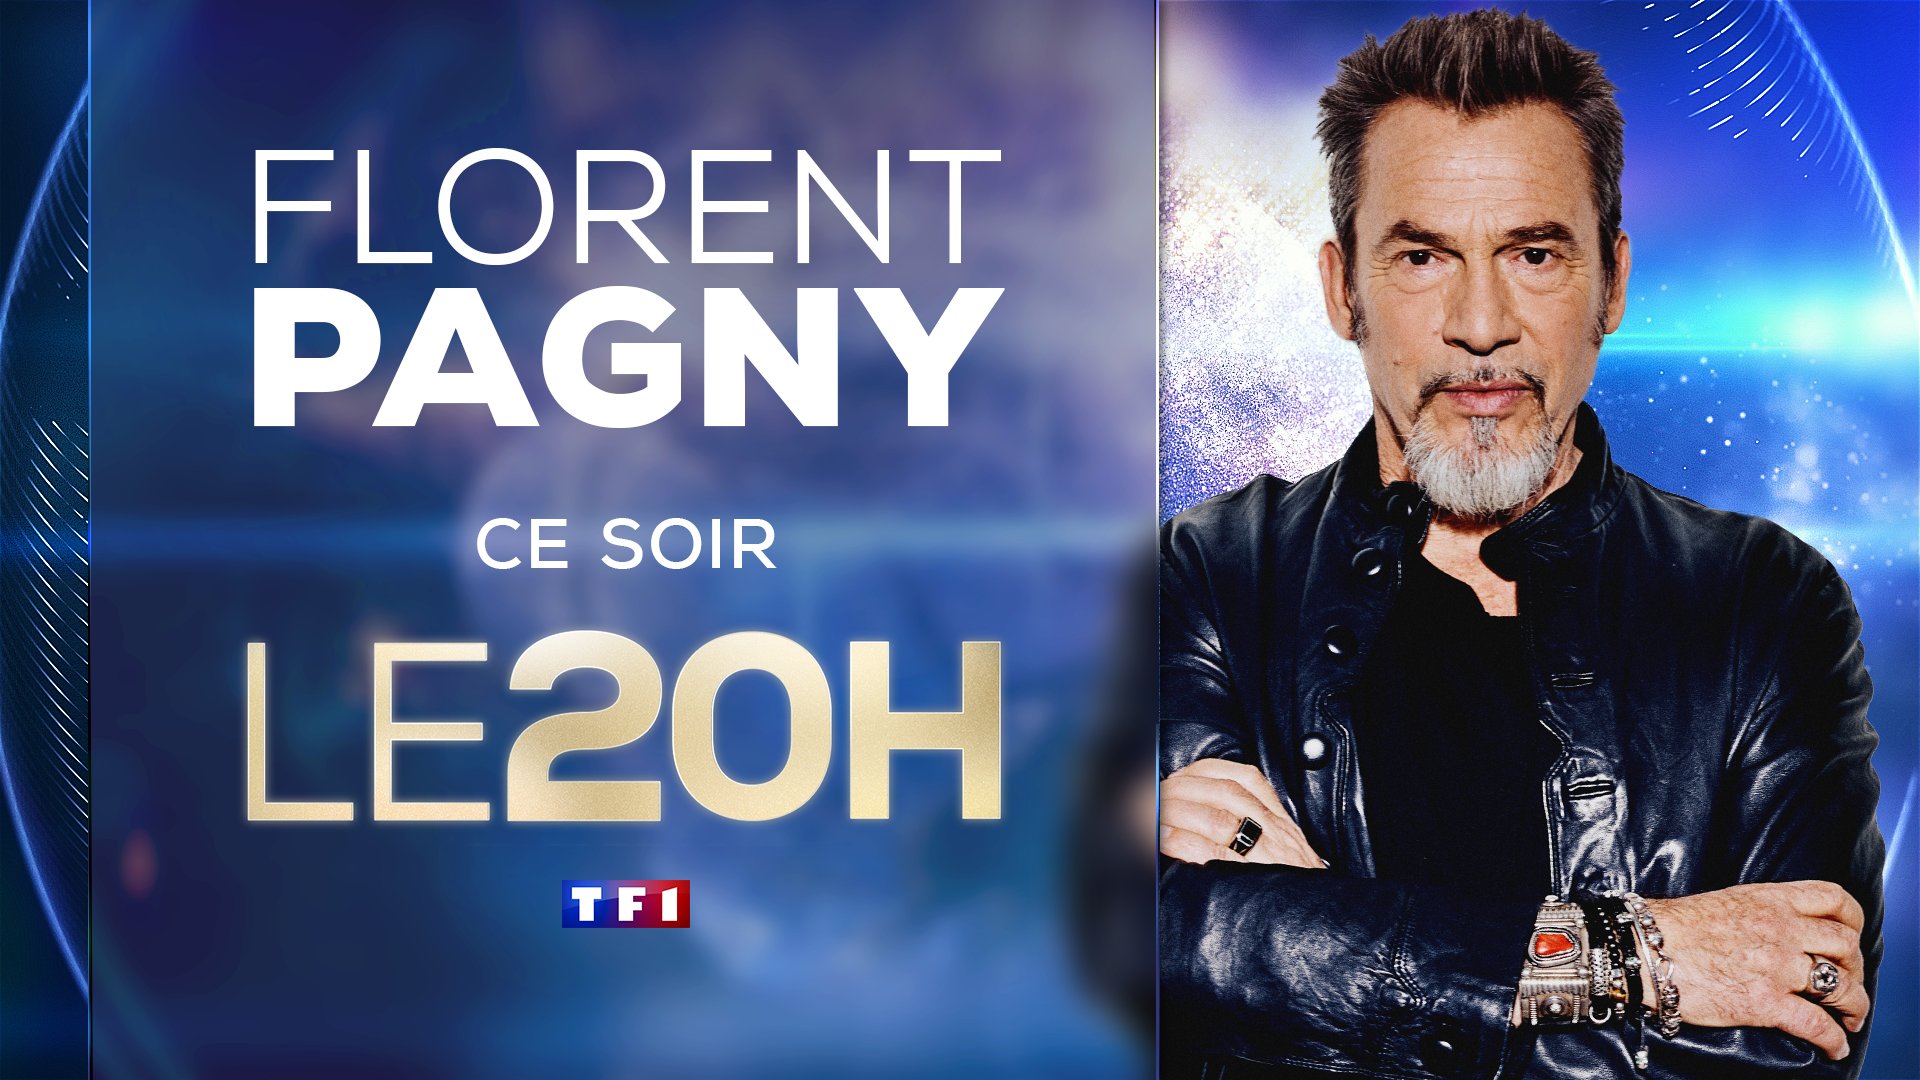 TF1Info on X: 🔴 𝐂𝐄 𝐒𝐎𝐈𝐑 - #𝐋𝐄𝟐𝟎𝐇 ▶️𝐅𝐥𝐨𝐫𝐞𝐧𝐭 𝐏𝐚𝐠𝐧𝐲 (@ florentpagny) sera l'invité du JT de 20H de @TF1 🗣️ A la fin d'une année  2023 très riche (tournée, livre et nouvel